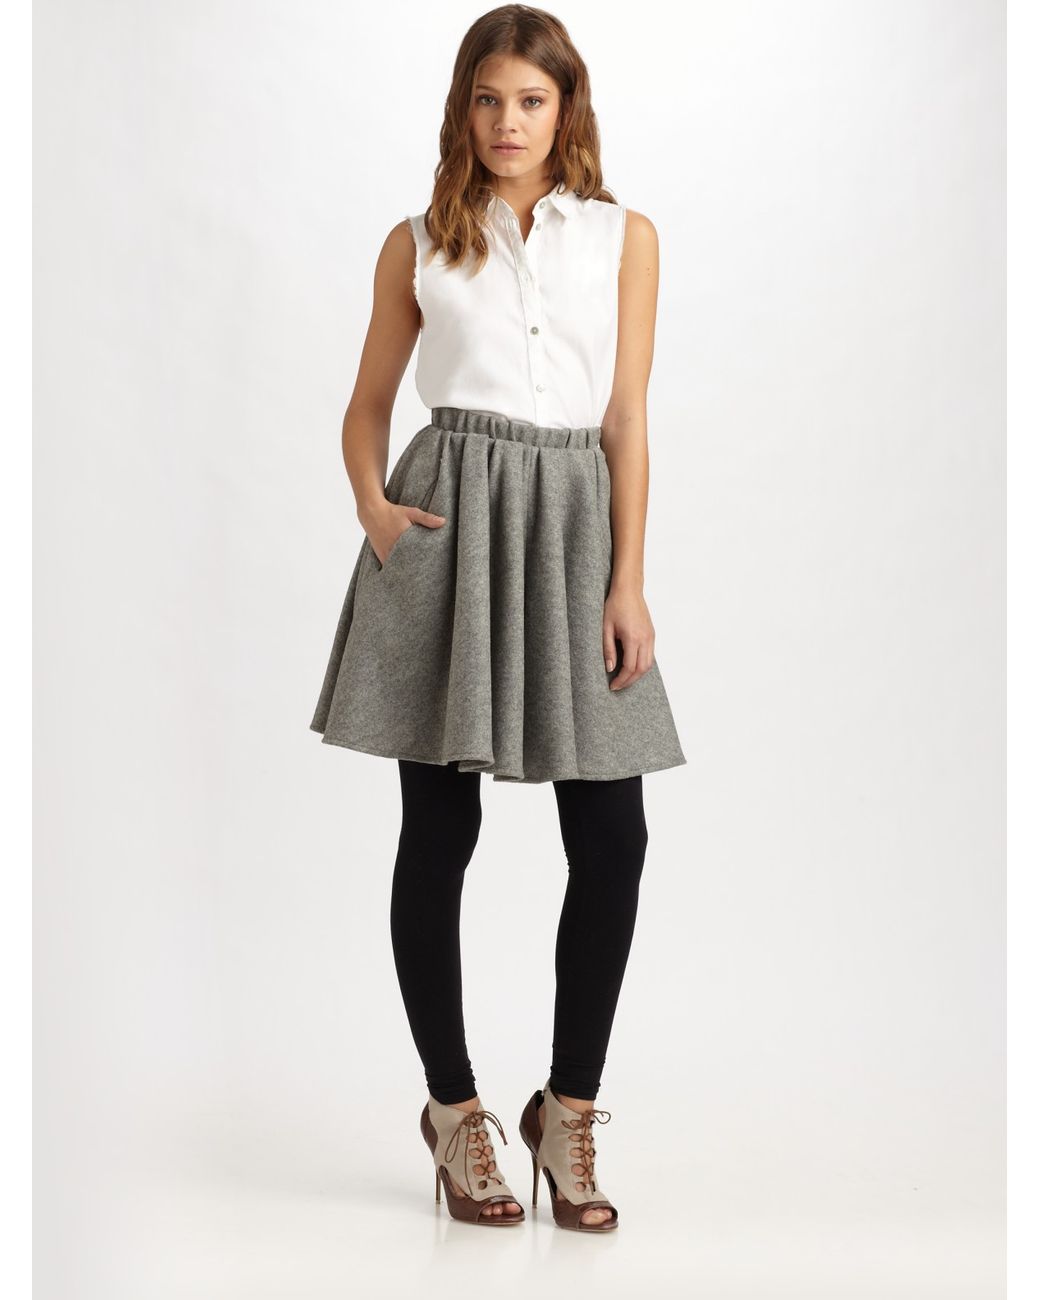 Acne Studios Gathered Wool Skirt in Grey (Gray) | Lyst